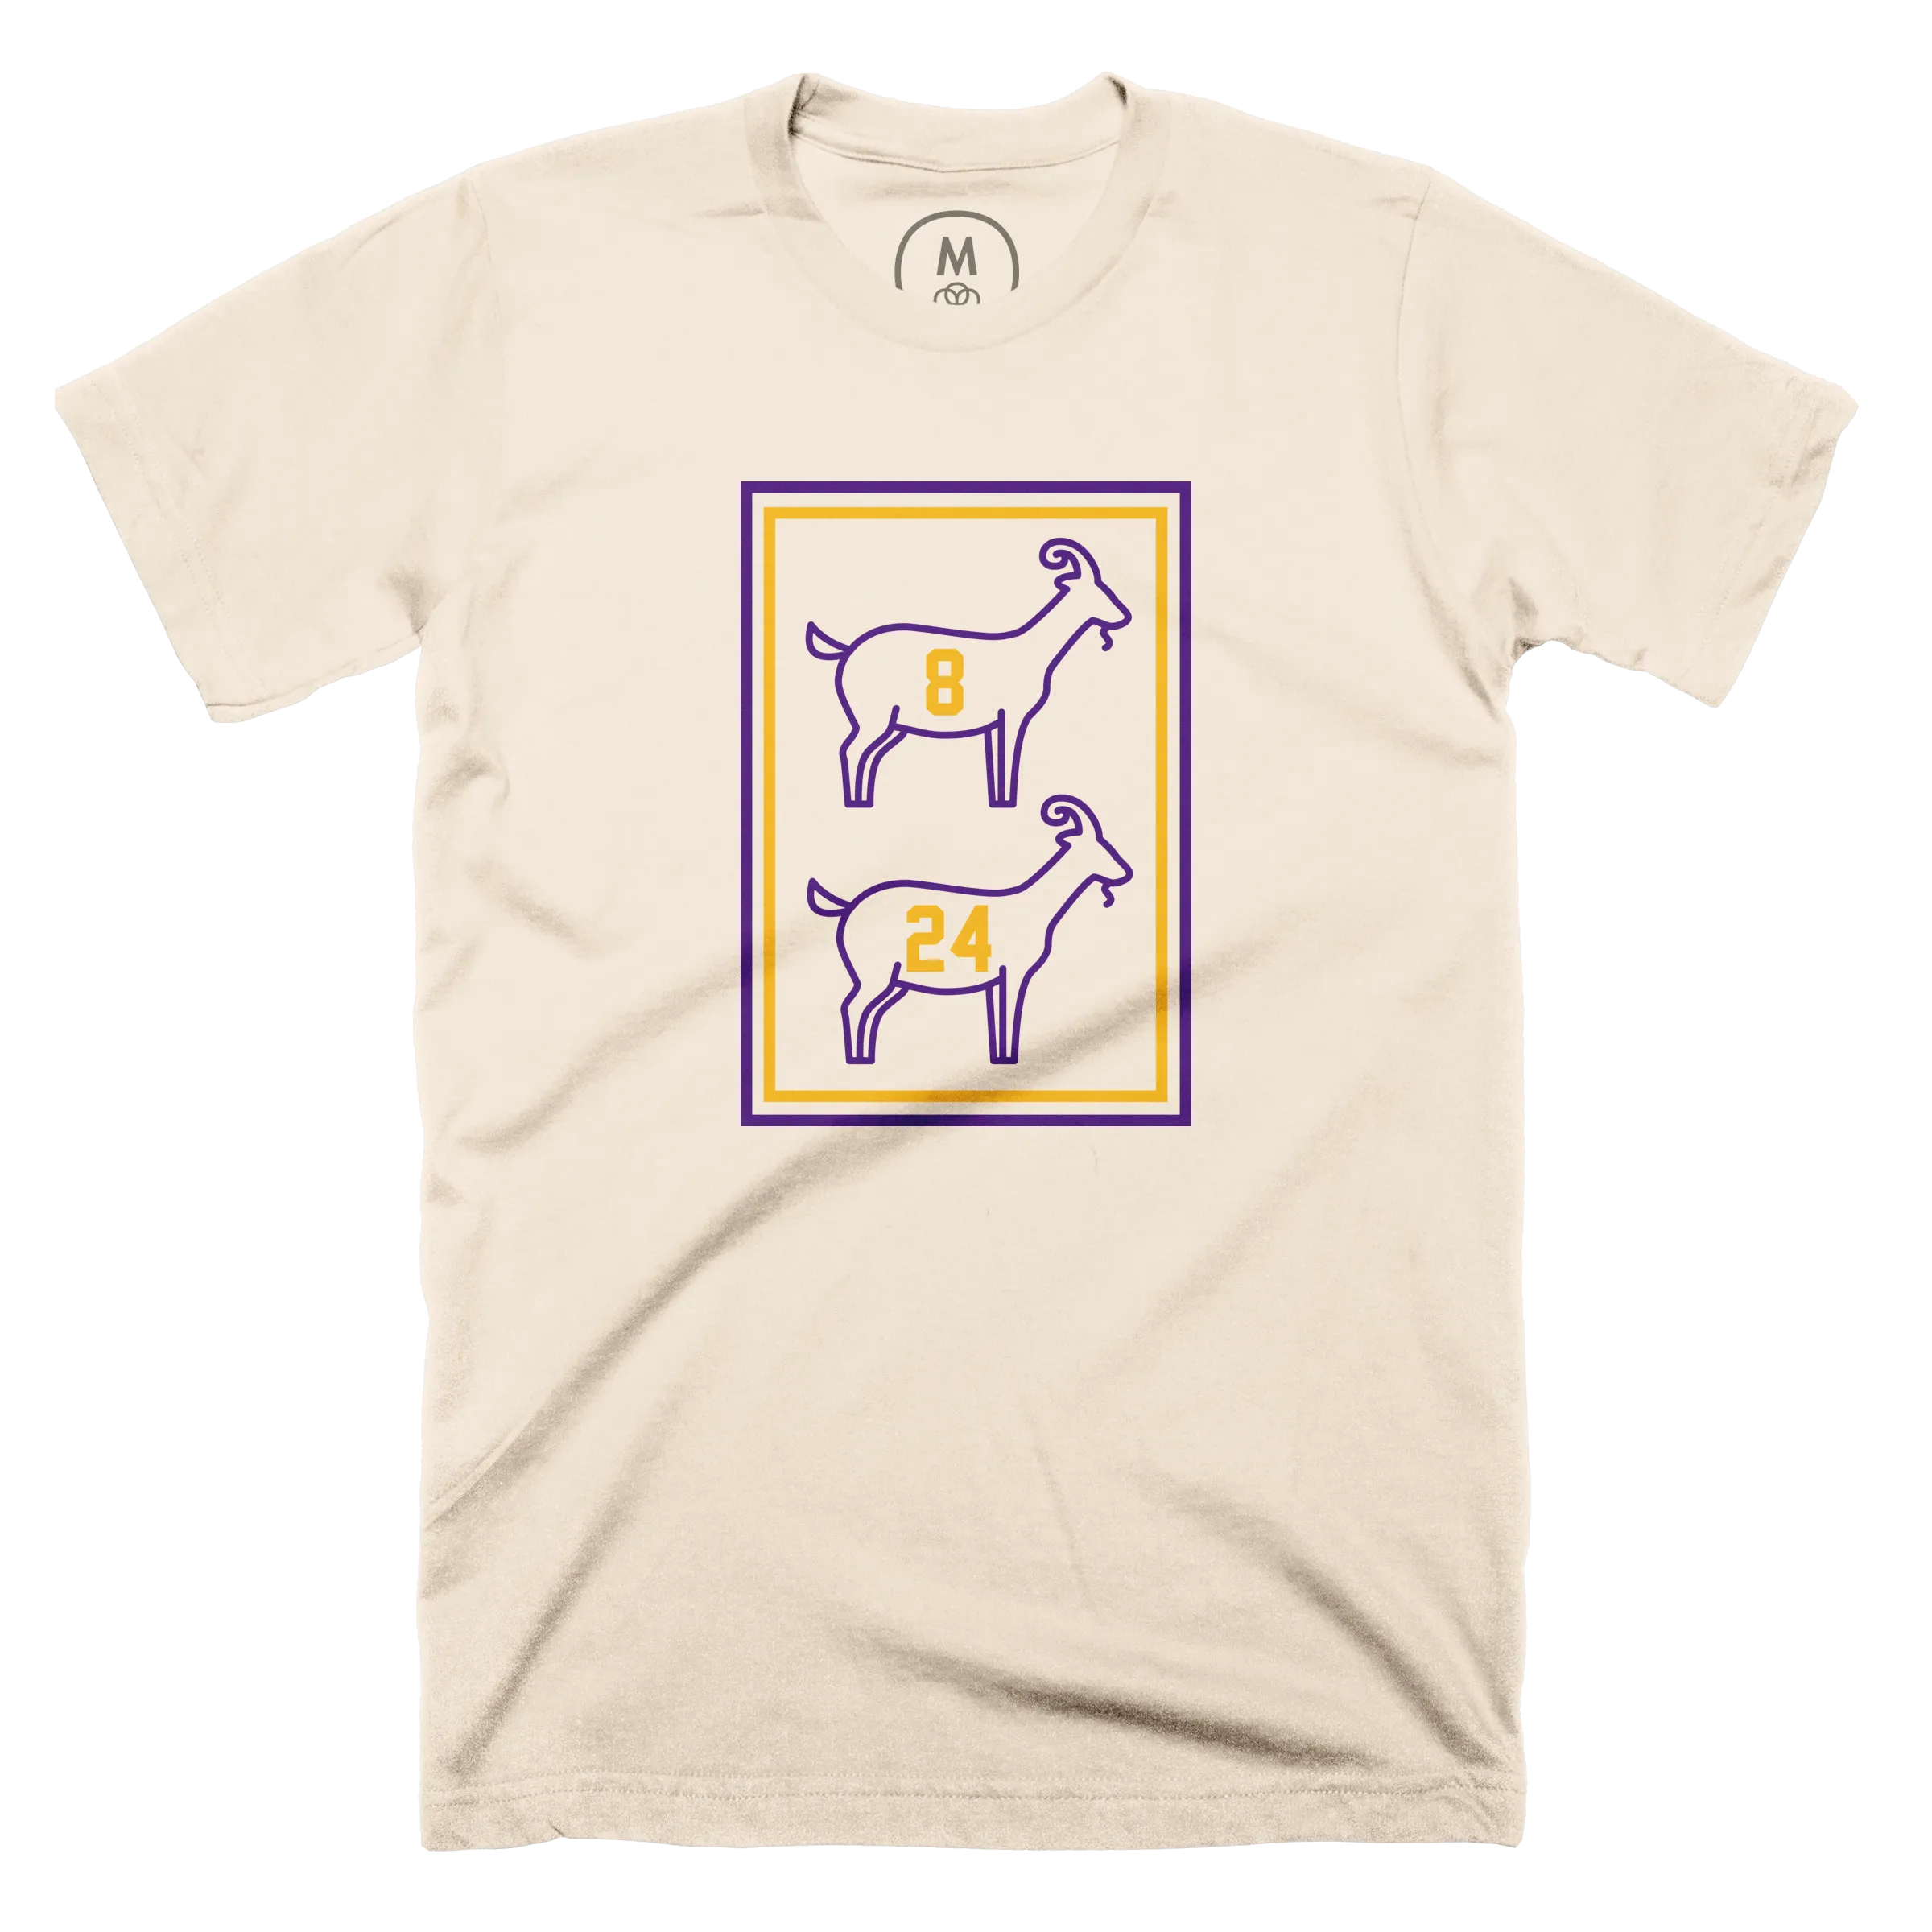 Kobe Bryant T-shirt Design 100% cotton Gildan brand